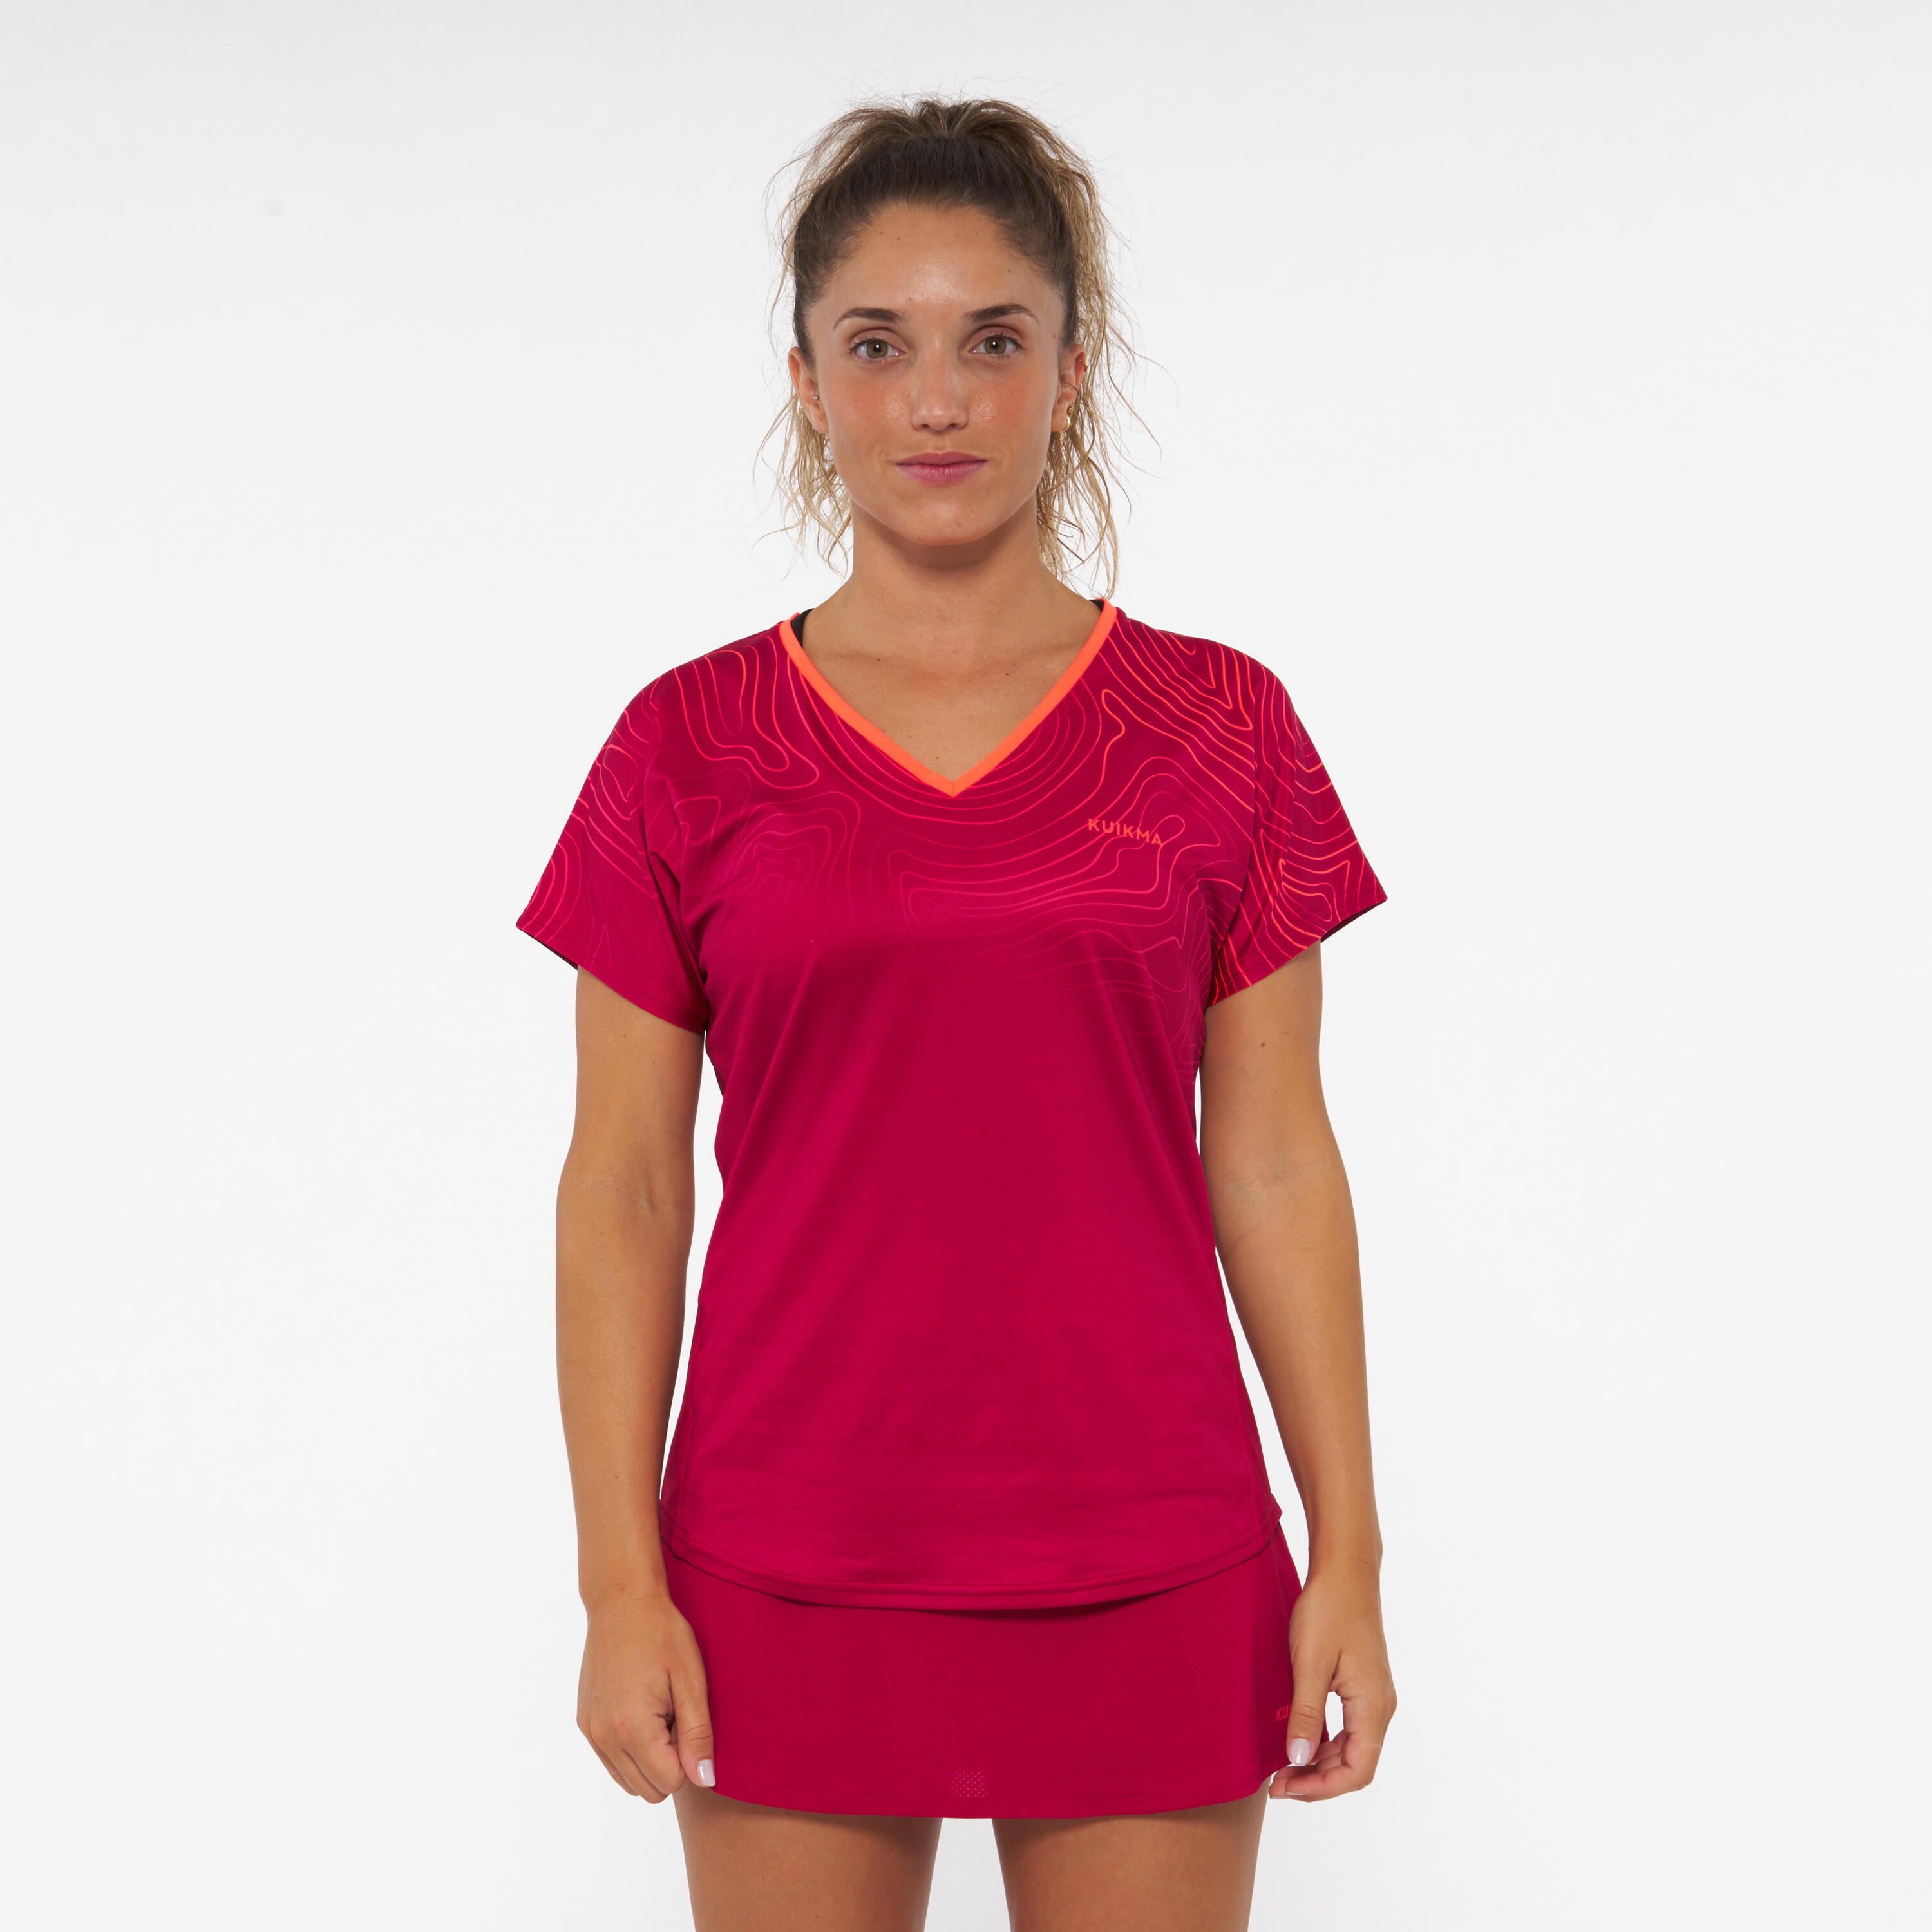 Decathlon | T-shirt padel donna 500 rossa |  Kuikma